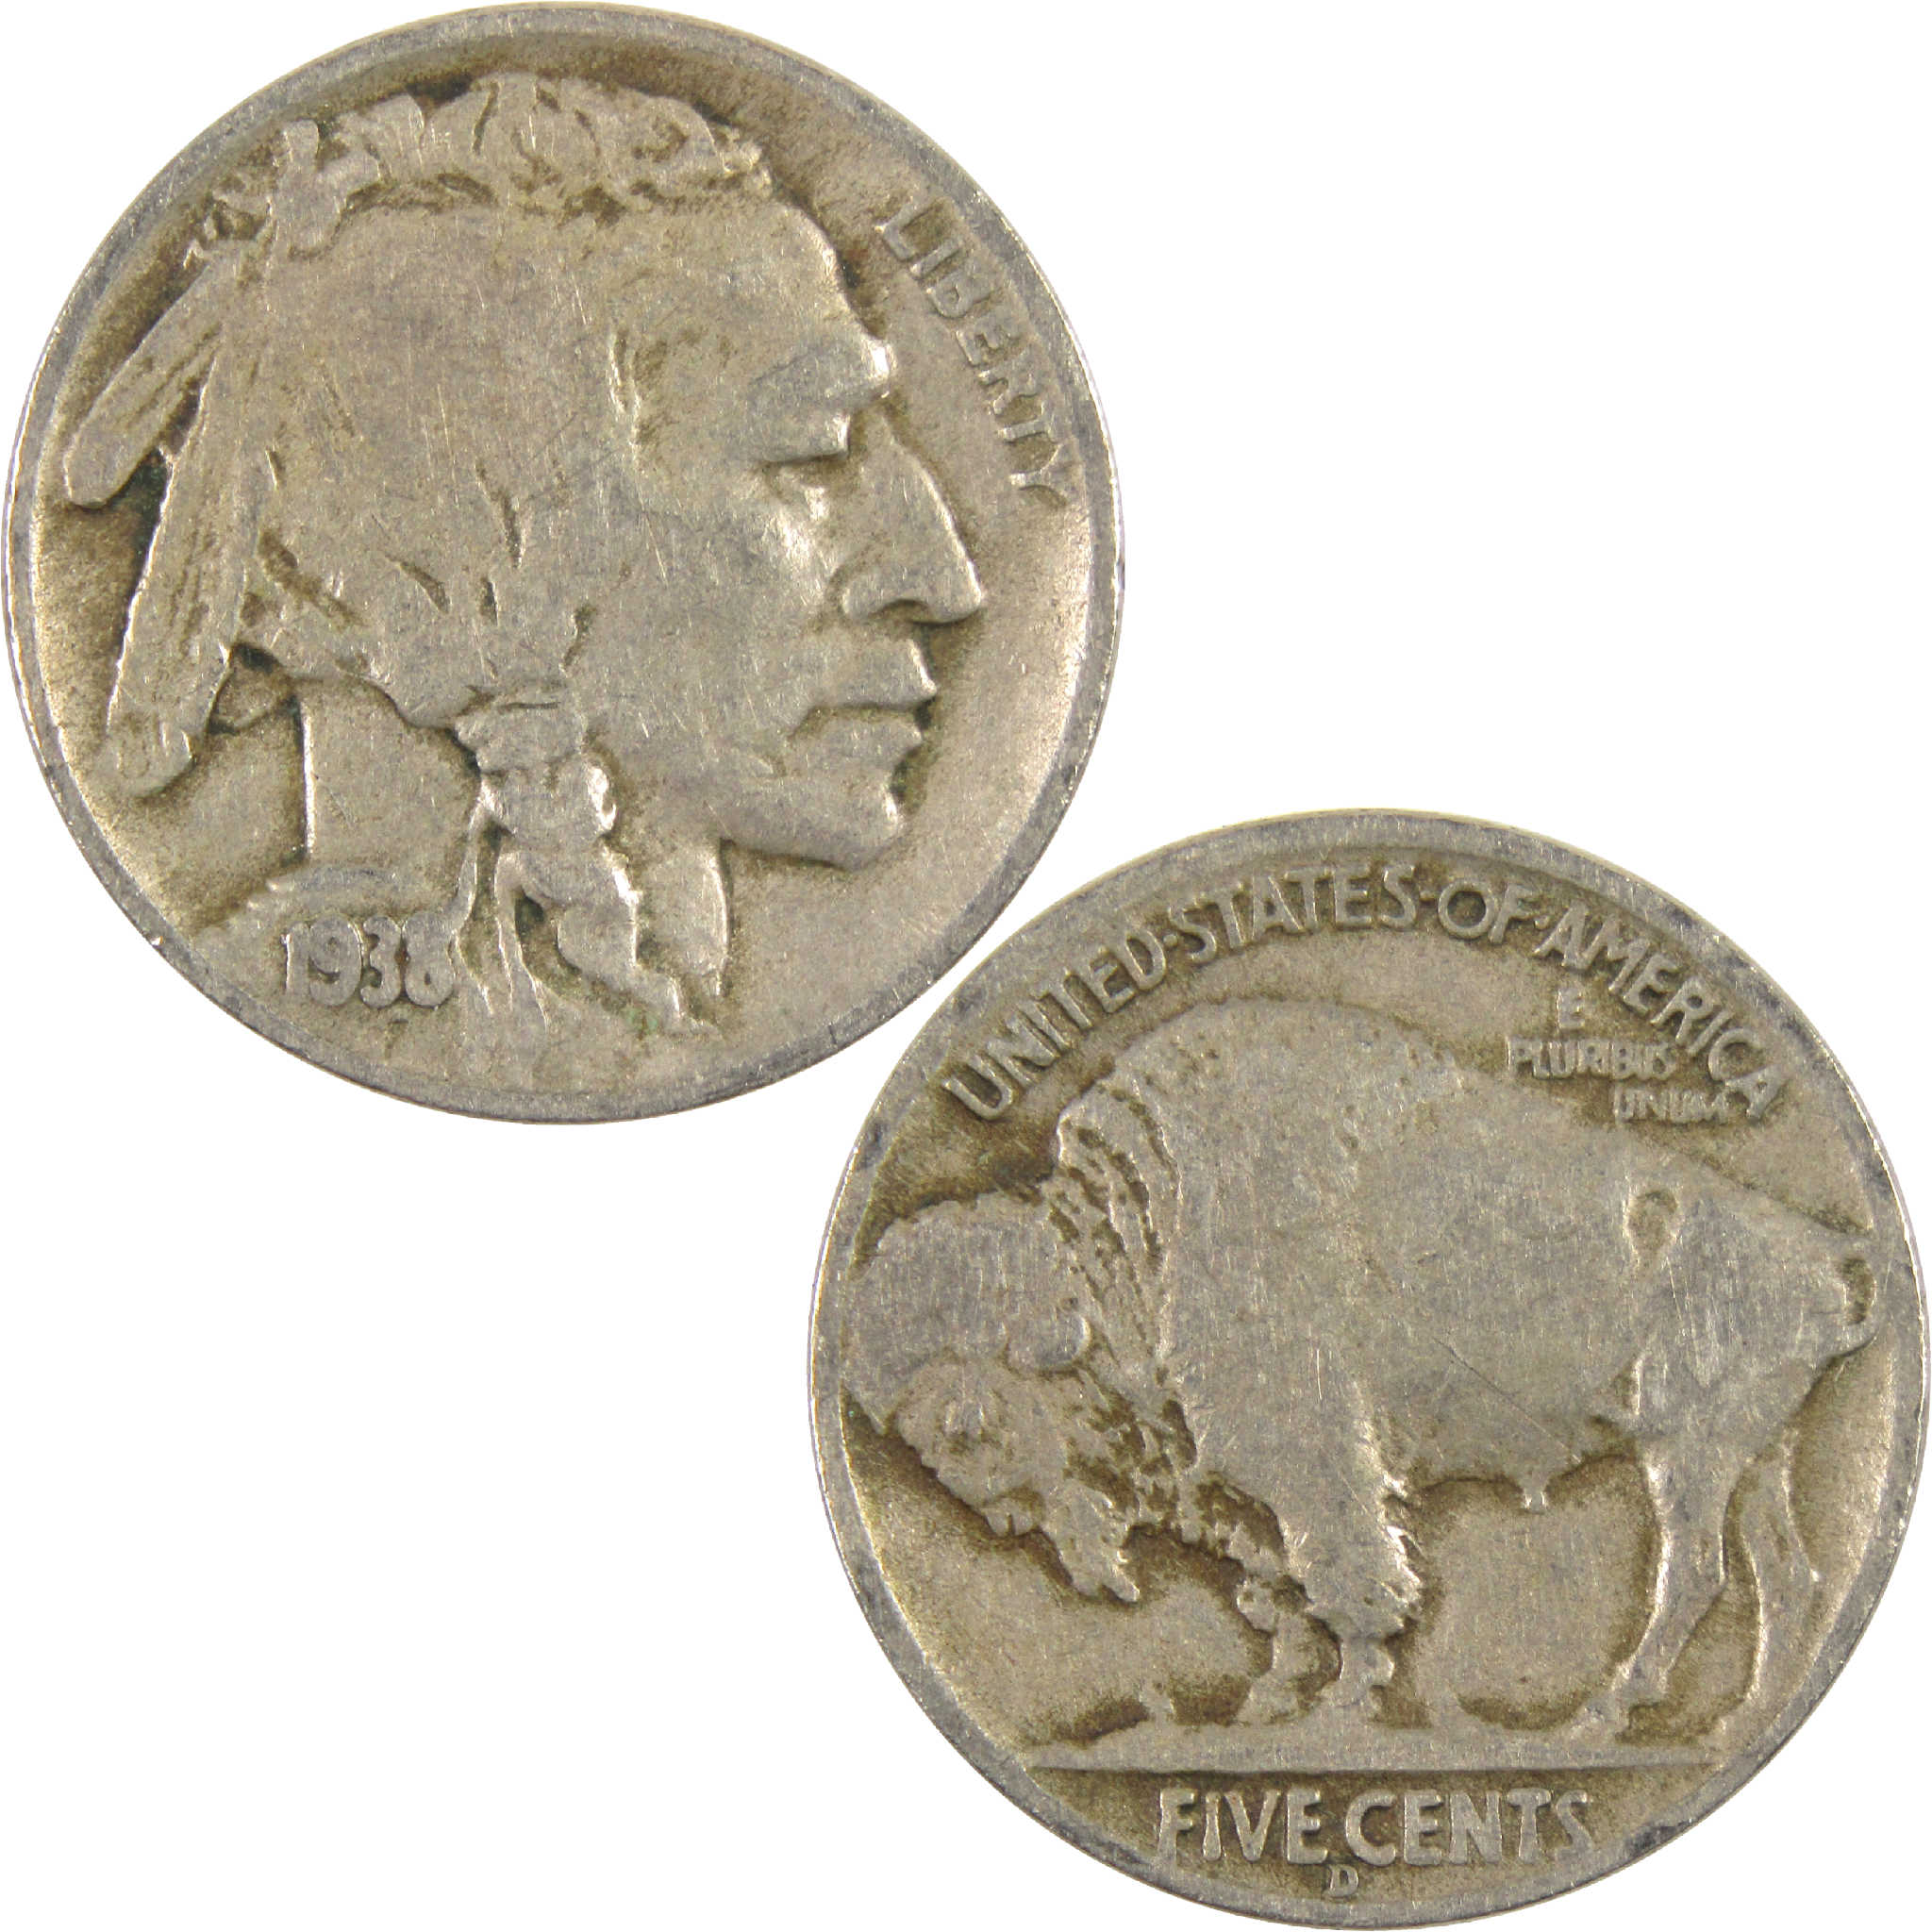 1938 D Indian Head Buffalo Nickel VG Very Good 5c Coin